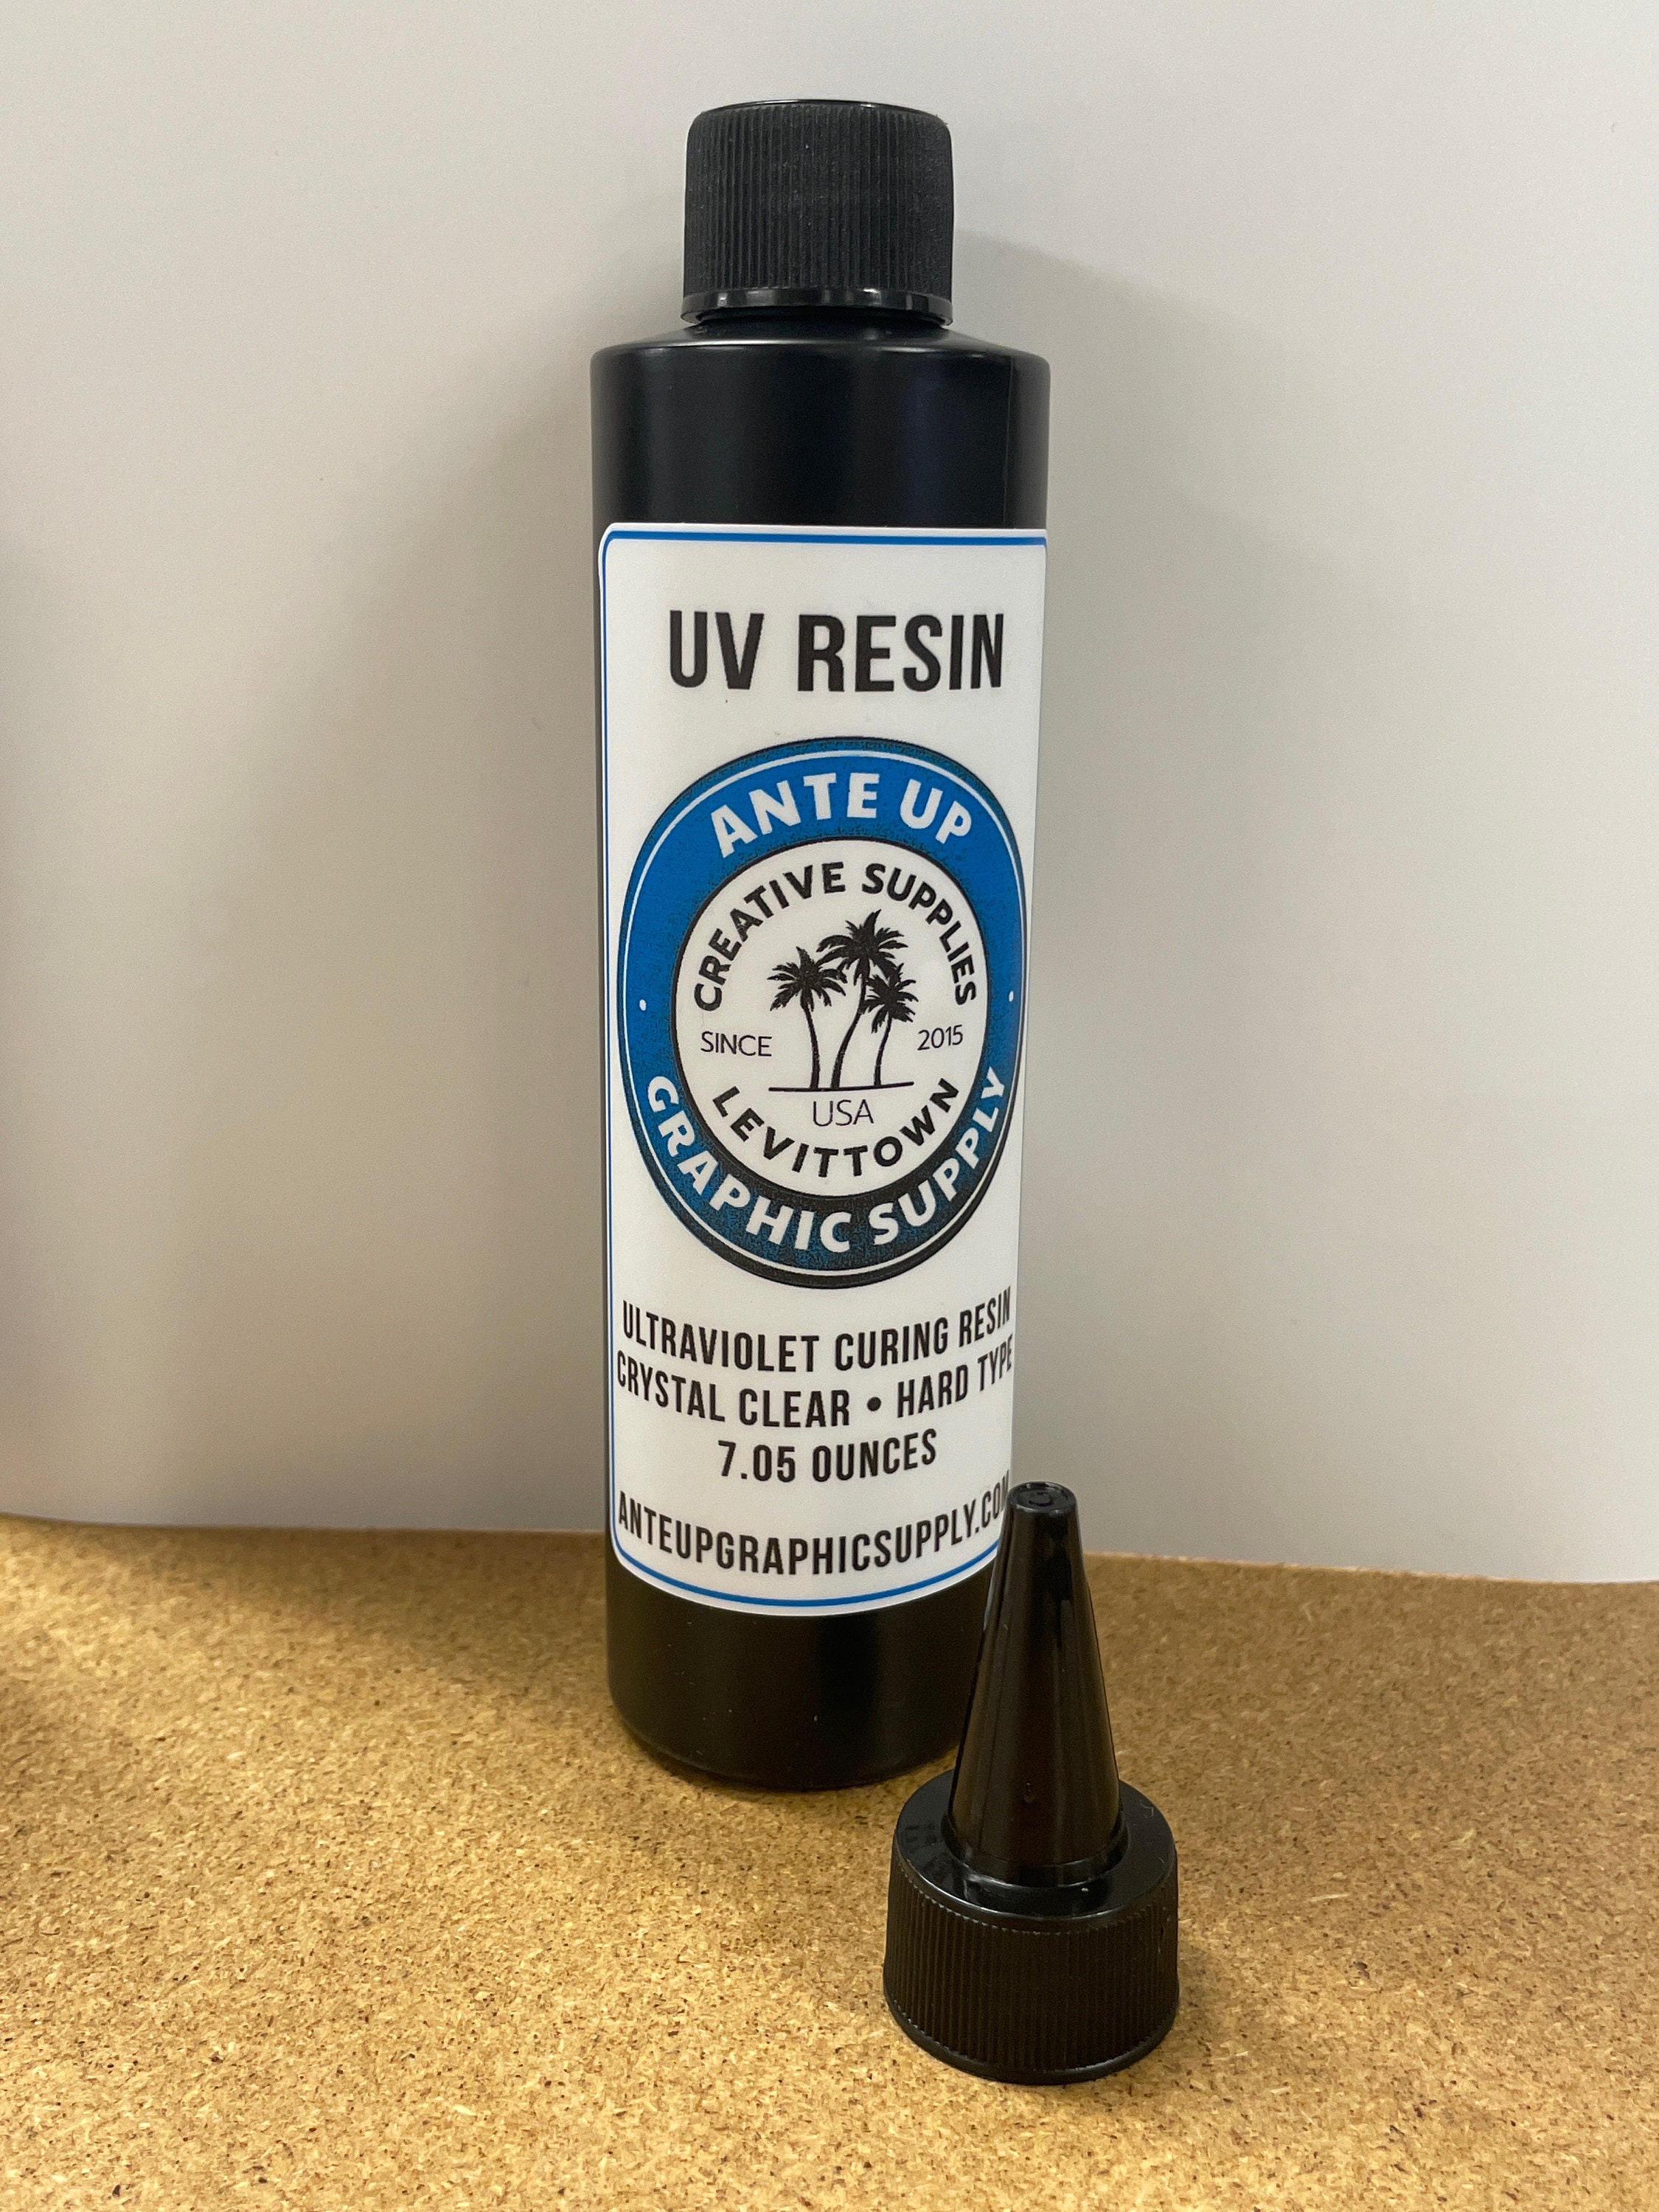 Mr.resin™ Original Craft UV Resin 36oz 1kg Crystal Clear Hard Type